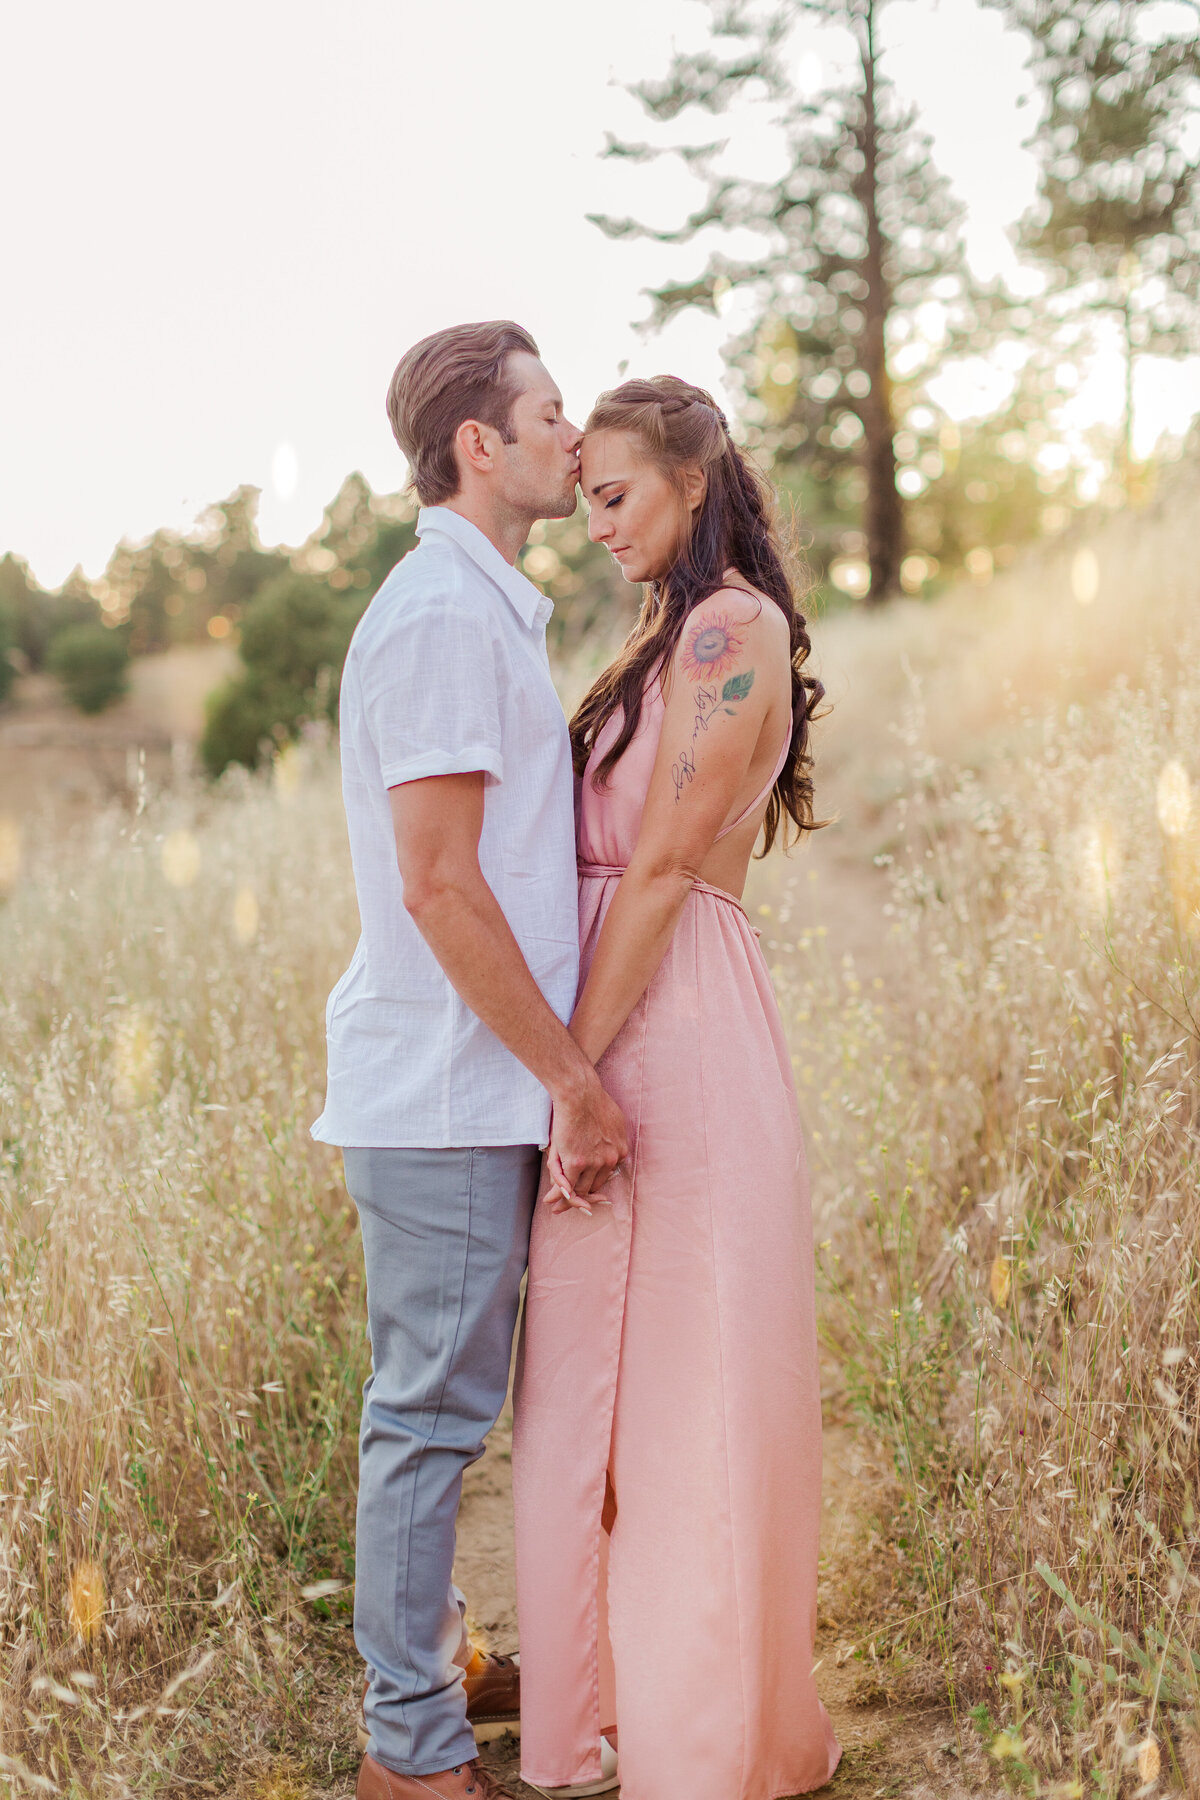 Professional Couples photographer in Orange County, CA